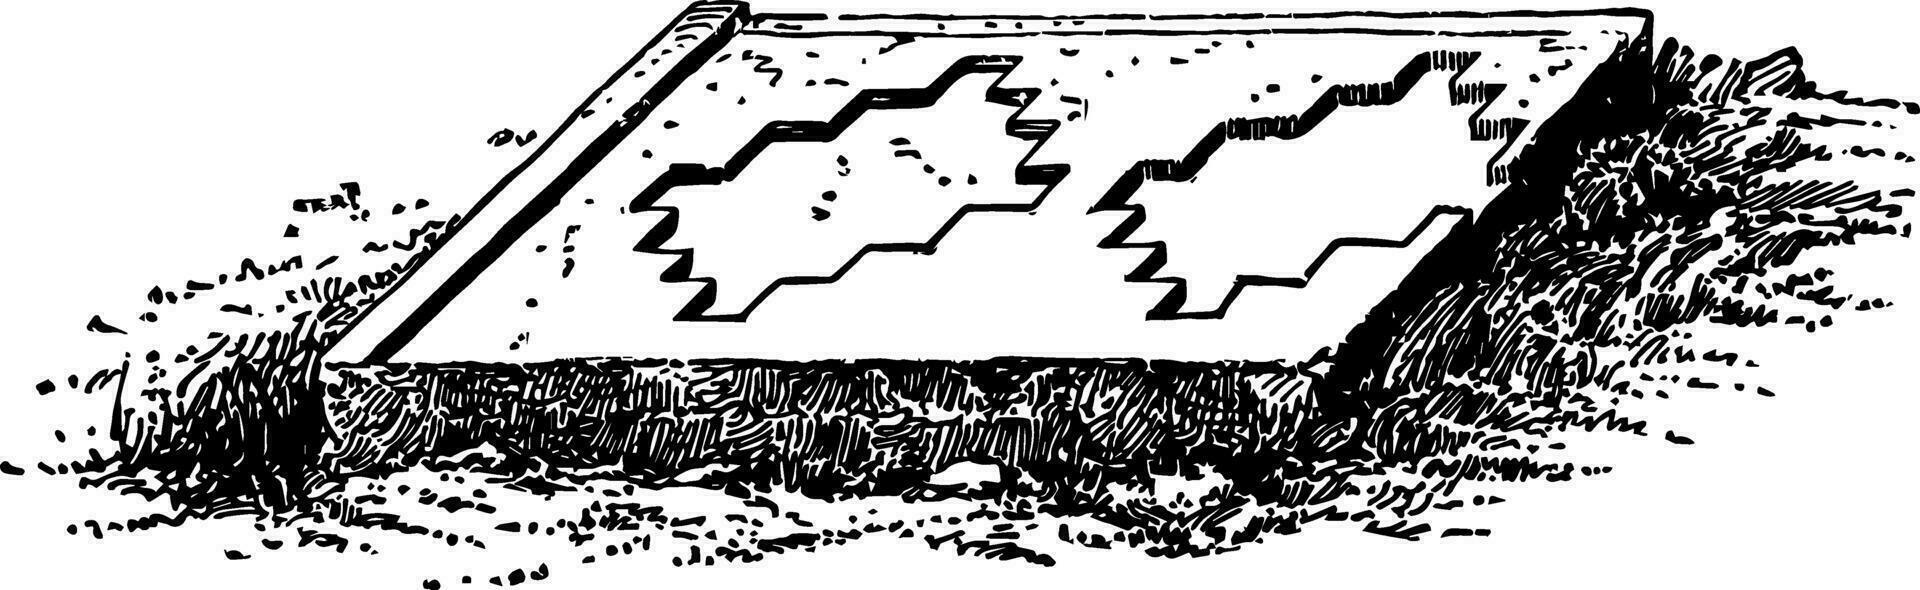 tiahuanacu Fragment Jahrgang Illustration. vektor